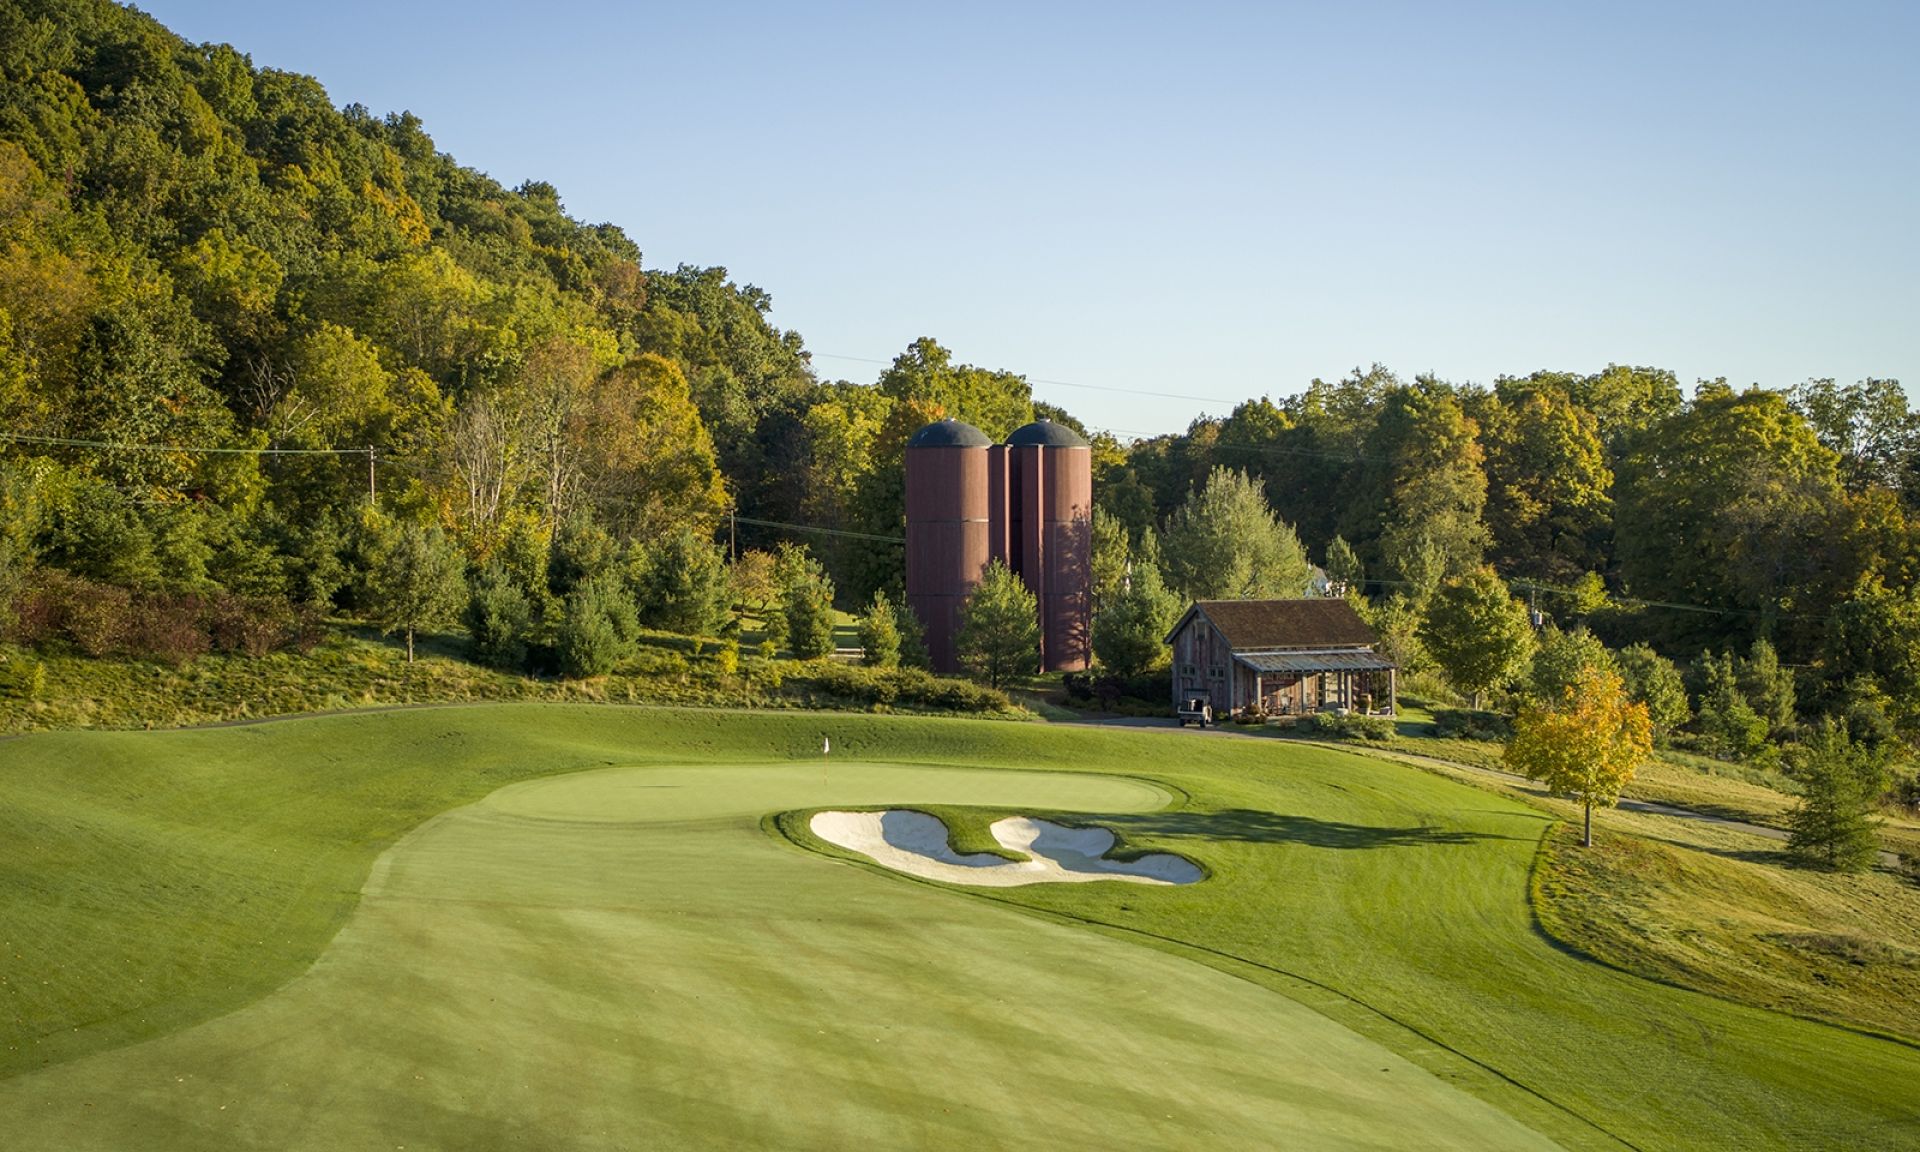 old silo golf course declining revenue